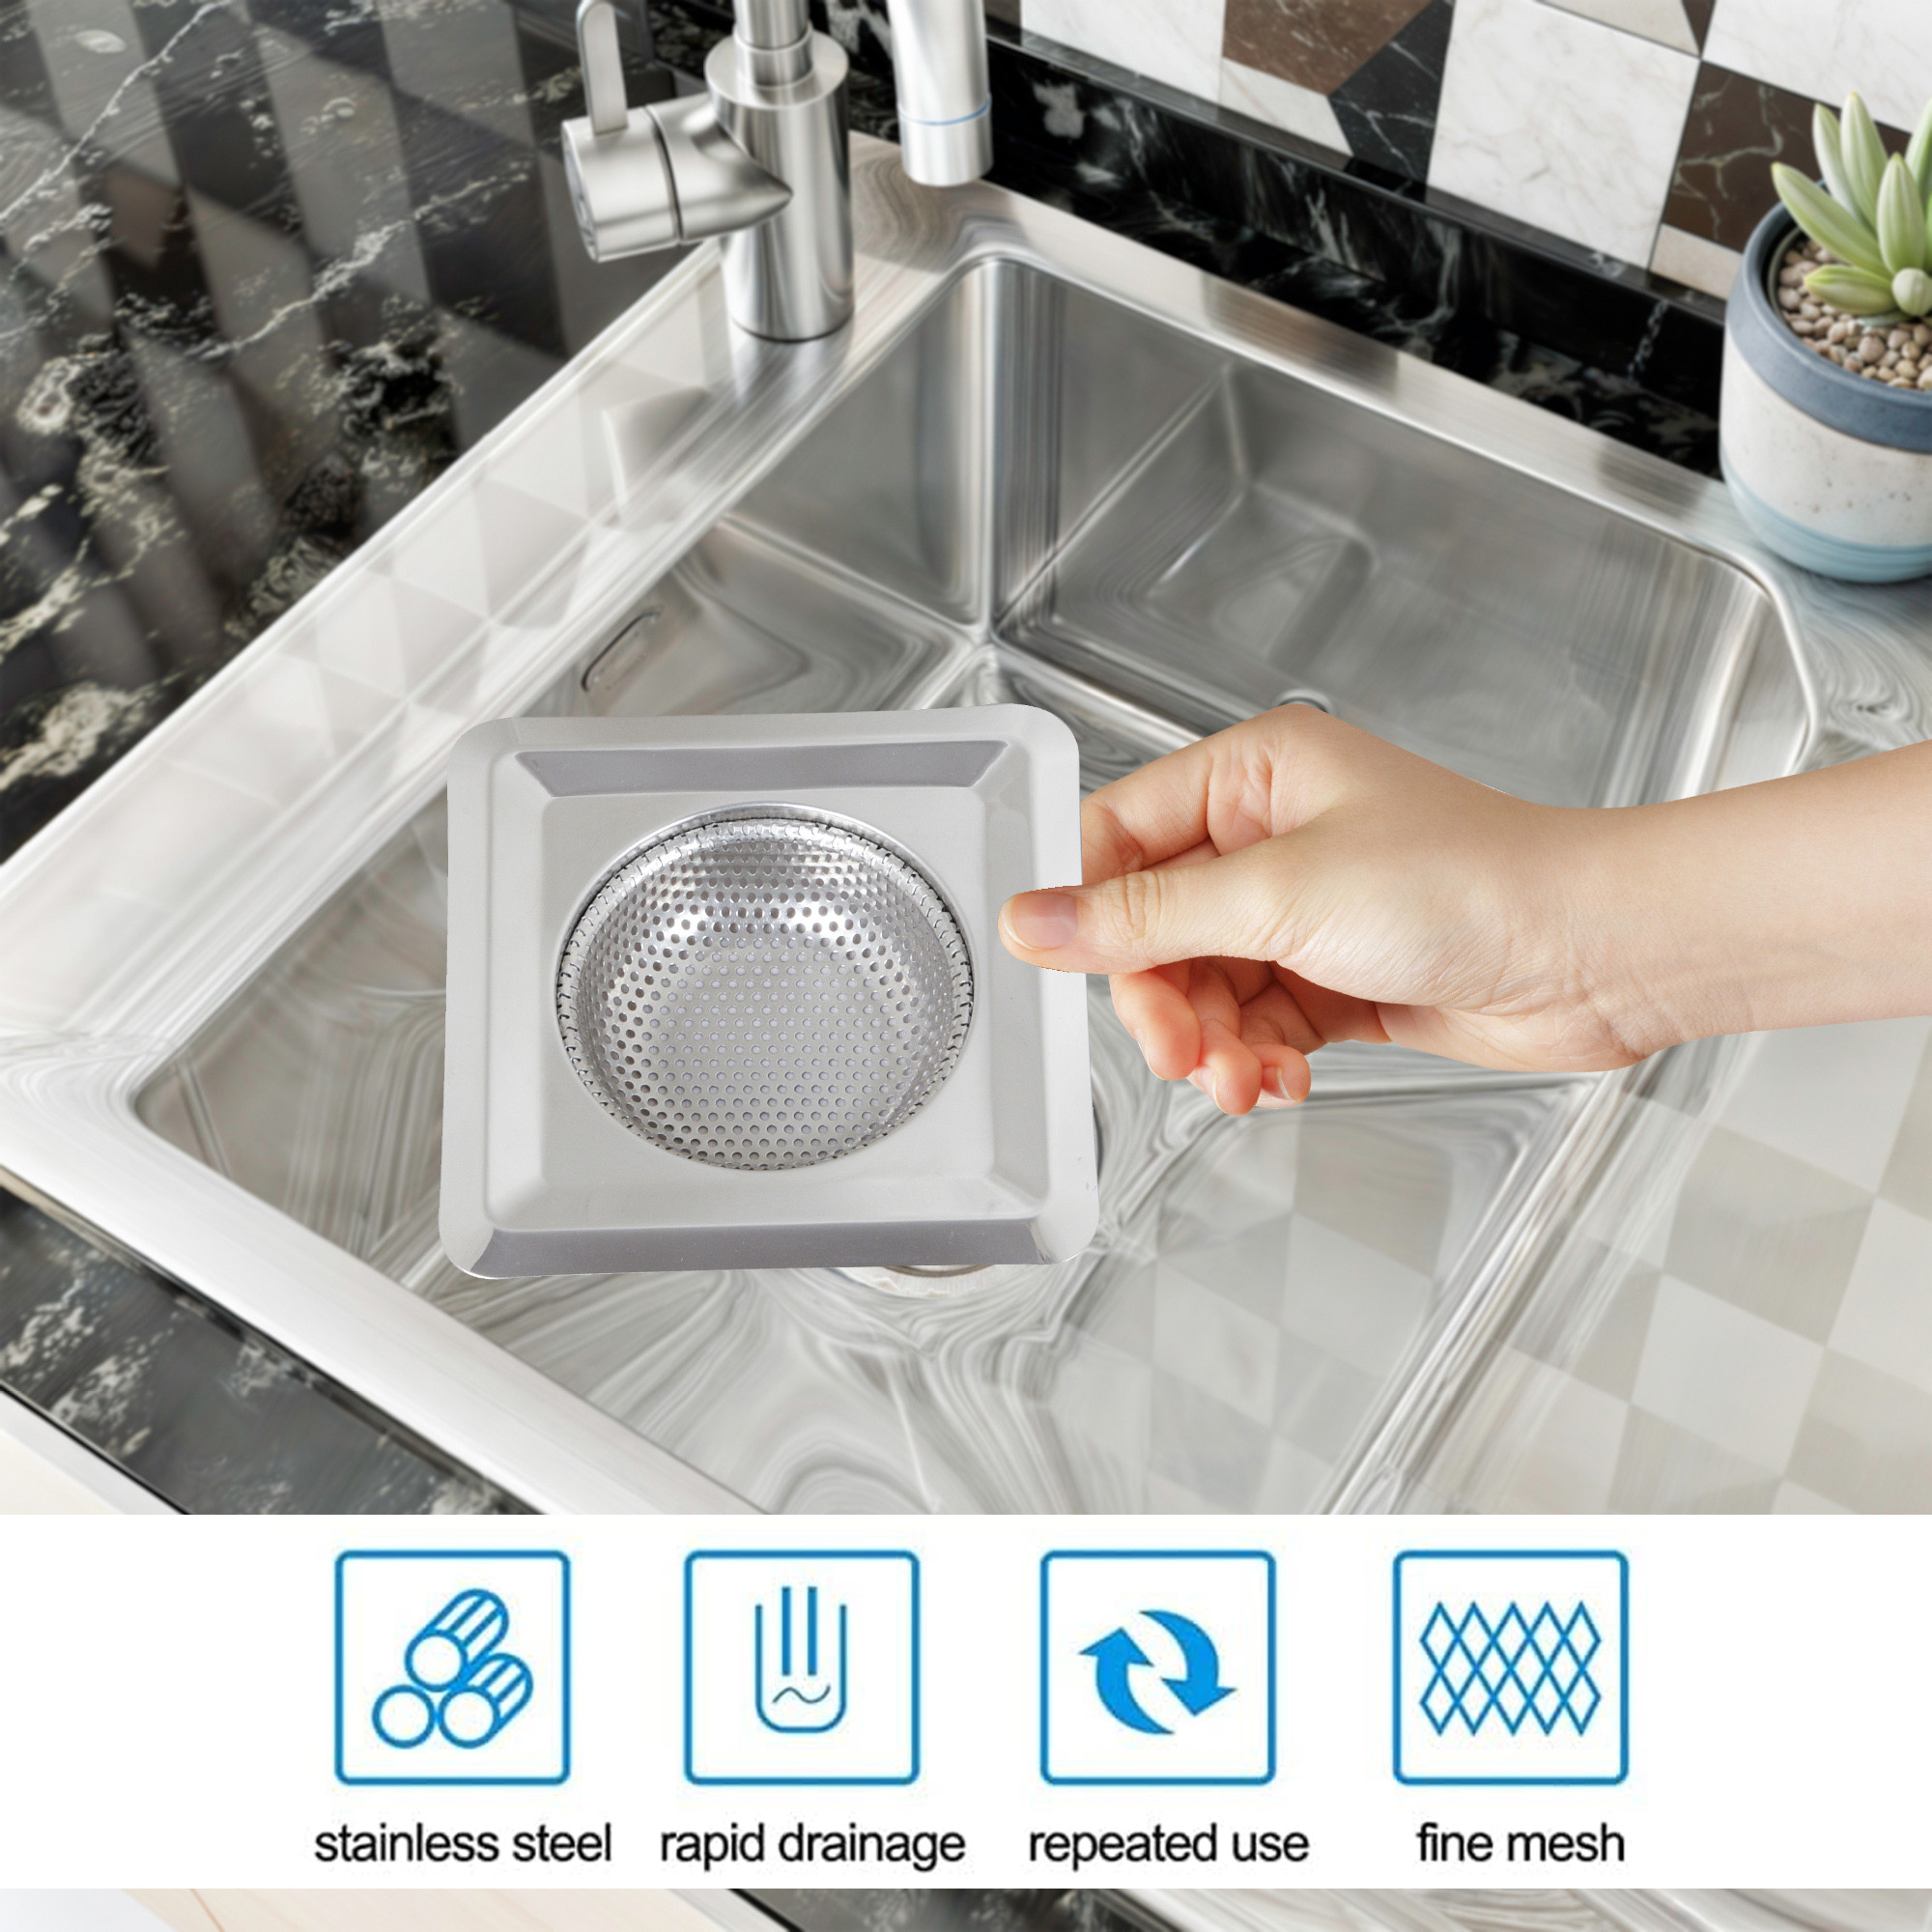 Kuber Industries Sink Strainer | Kitchen Sink Strainer | Sink Drain Strainer | Drain Catcher for Bathroom | Mesh Drain Deep Filter for Kitchen | Sink Square Moti Jali | 115 mm | Silver